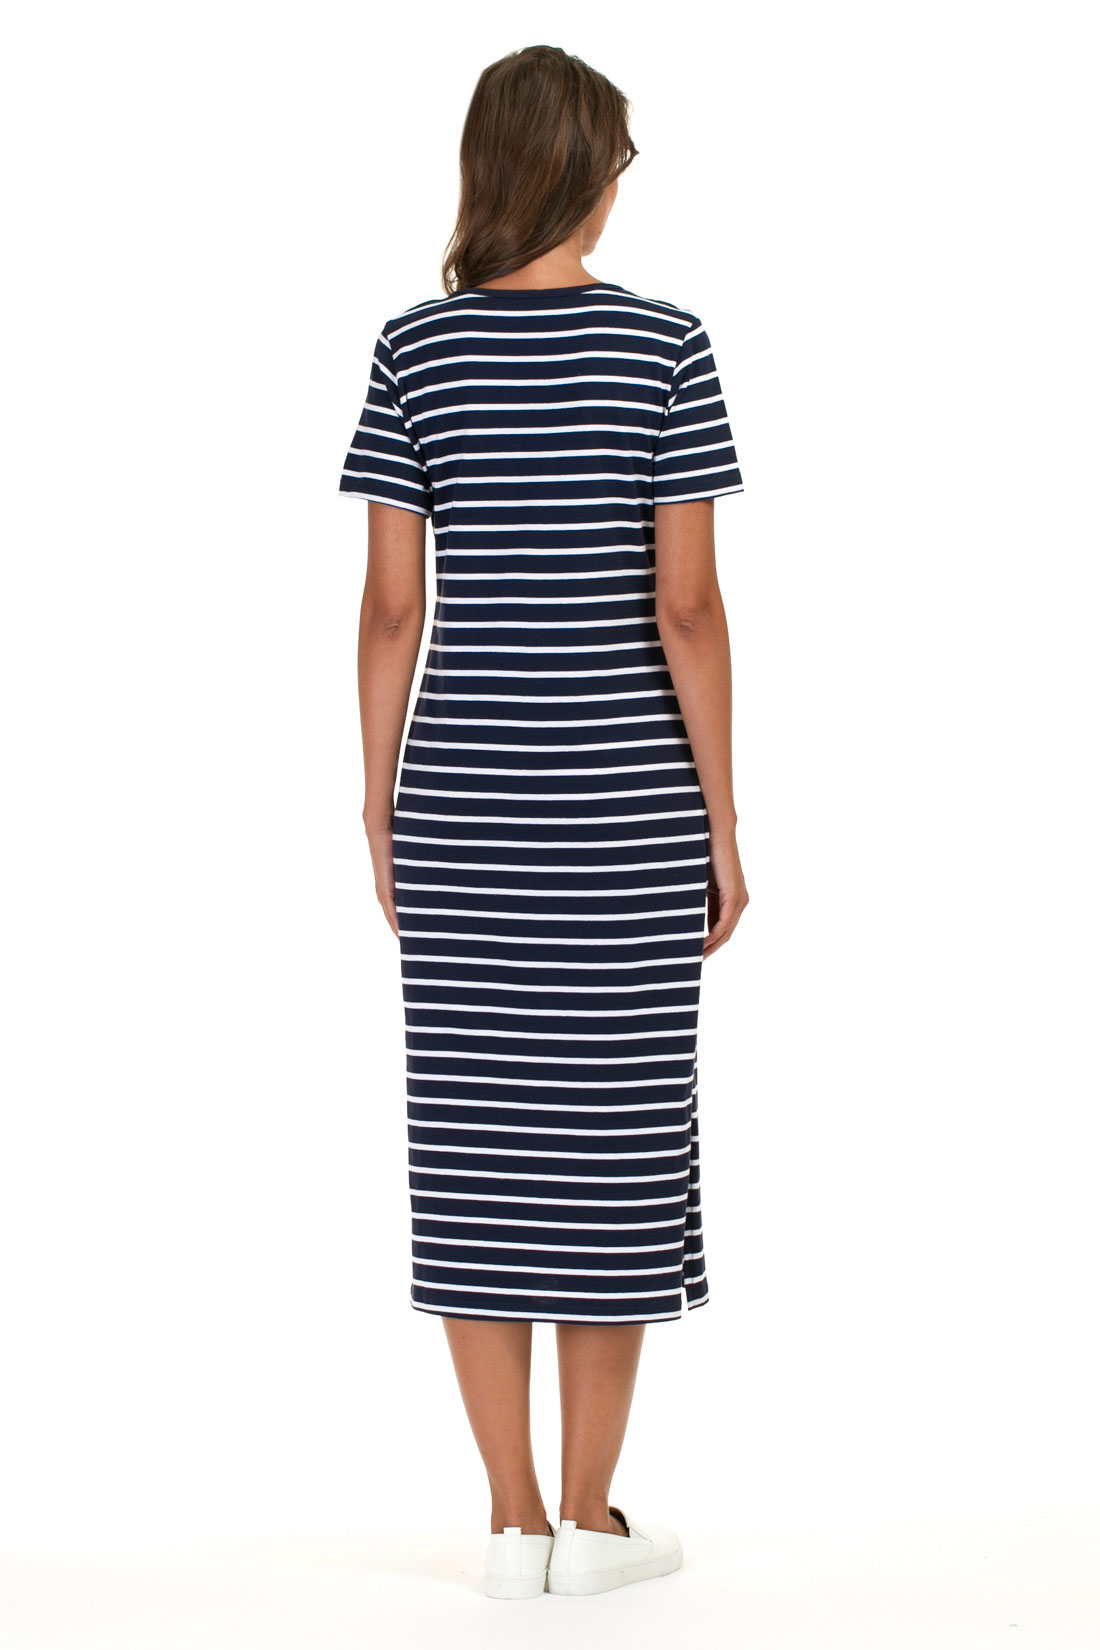 Платье-миди в морскую полоску (арт. baon B457099), размер XXL, цвет dark navy striped#синий Платье-миди в морскую полоску (арт. baon B457099) - фото 2